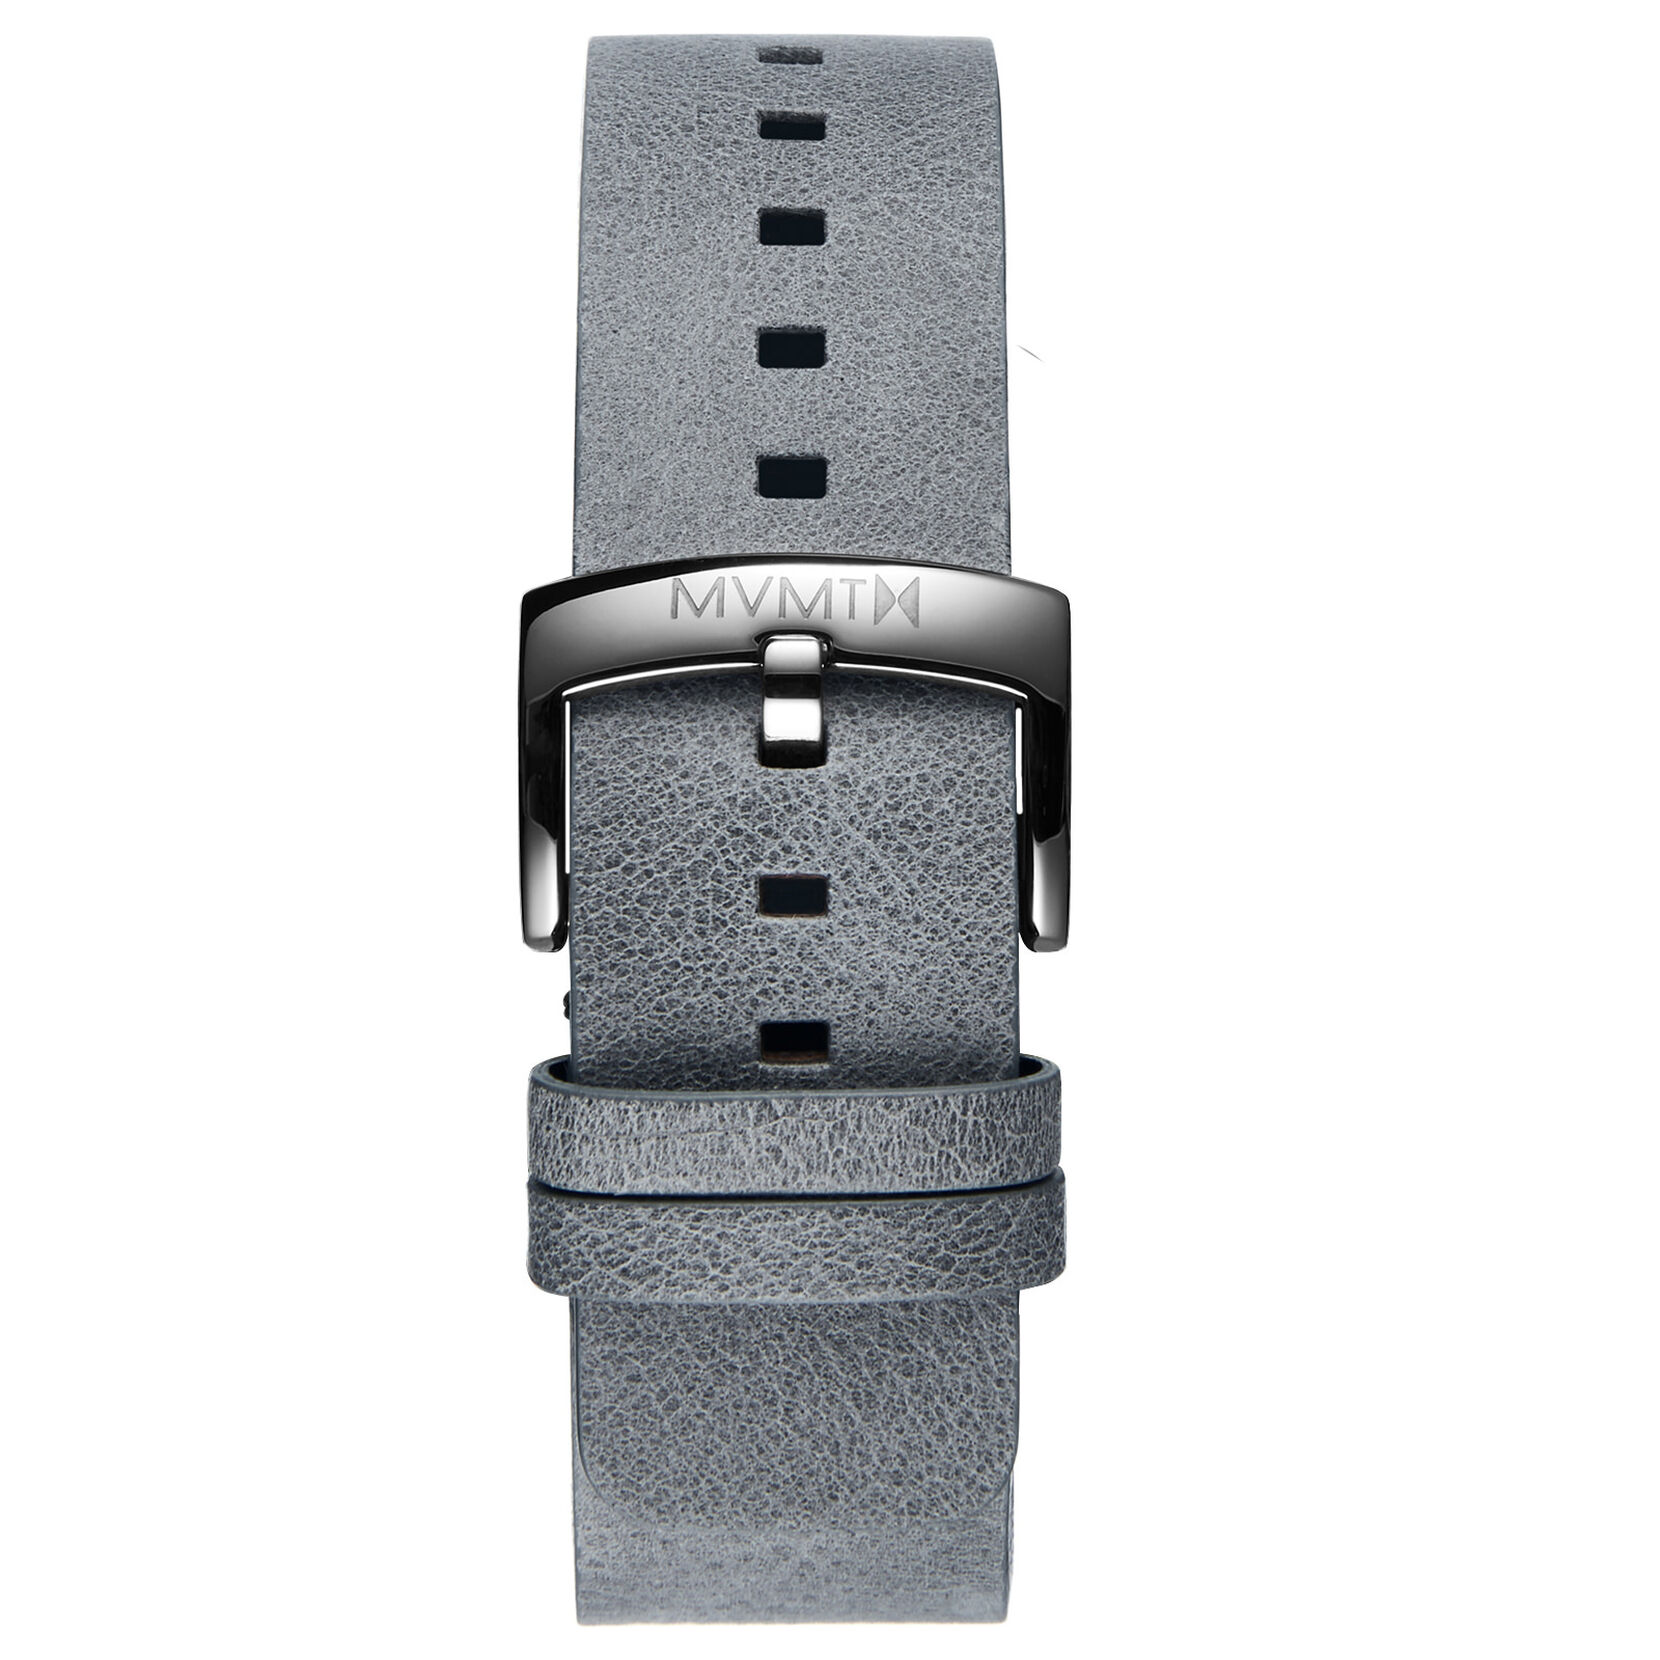 Blacktop - 24mm Grey Leather